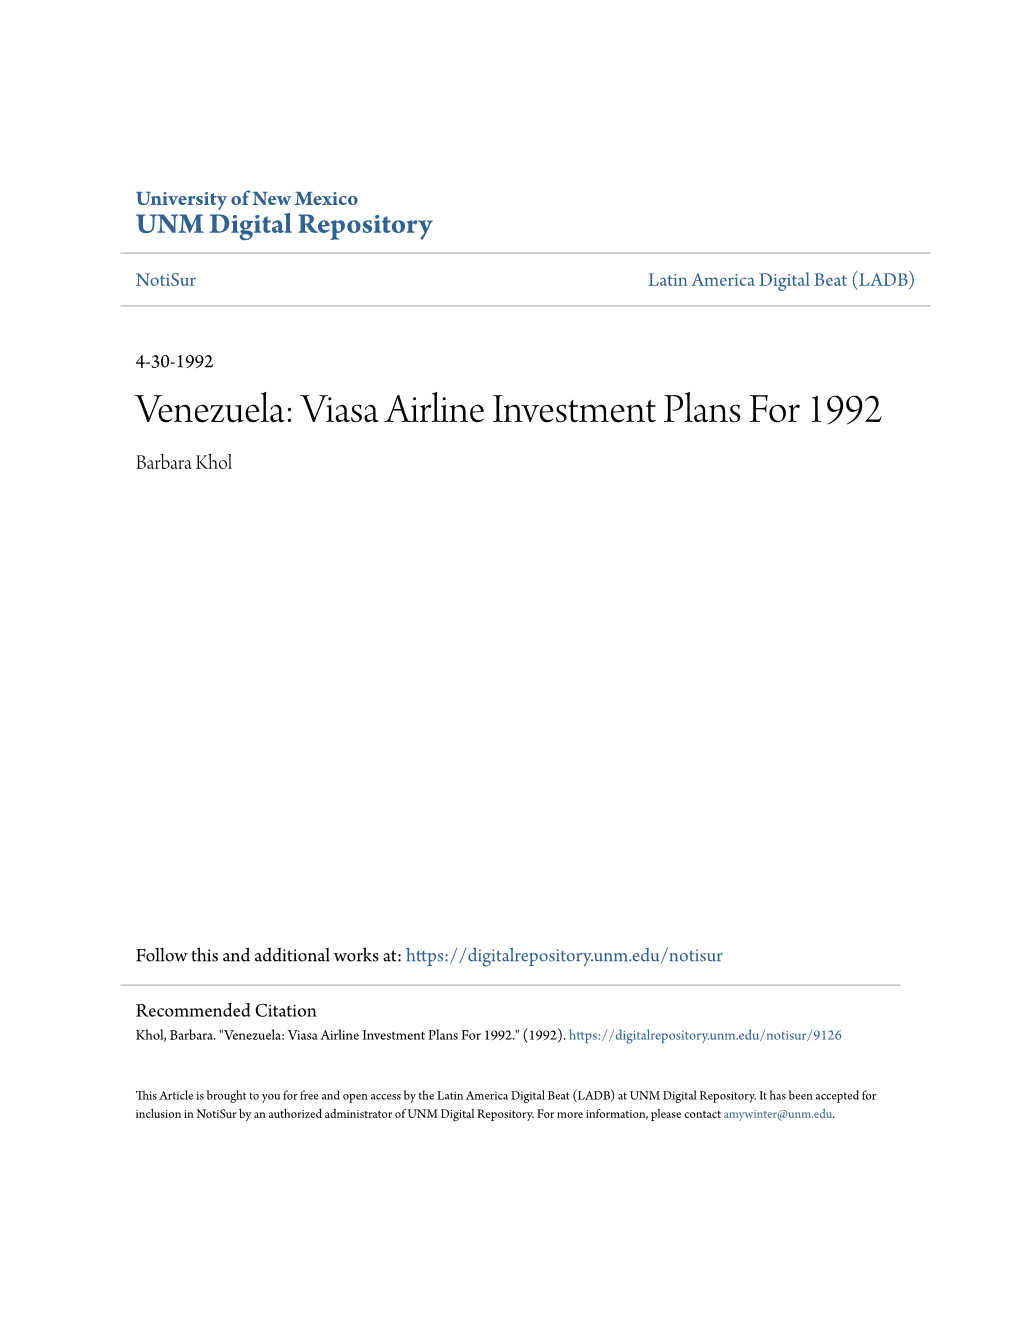 Venezuela: Viasa Airline Investment Plans for 1992 Barbara Khol